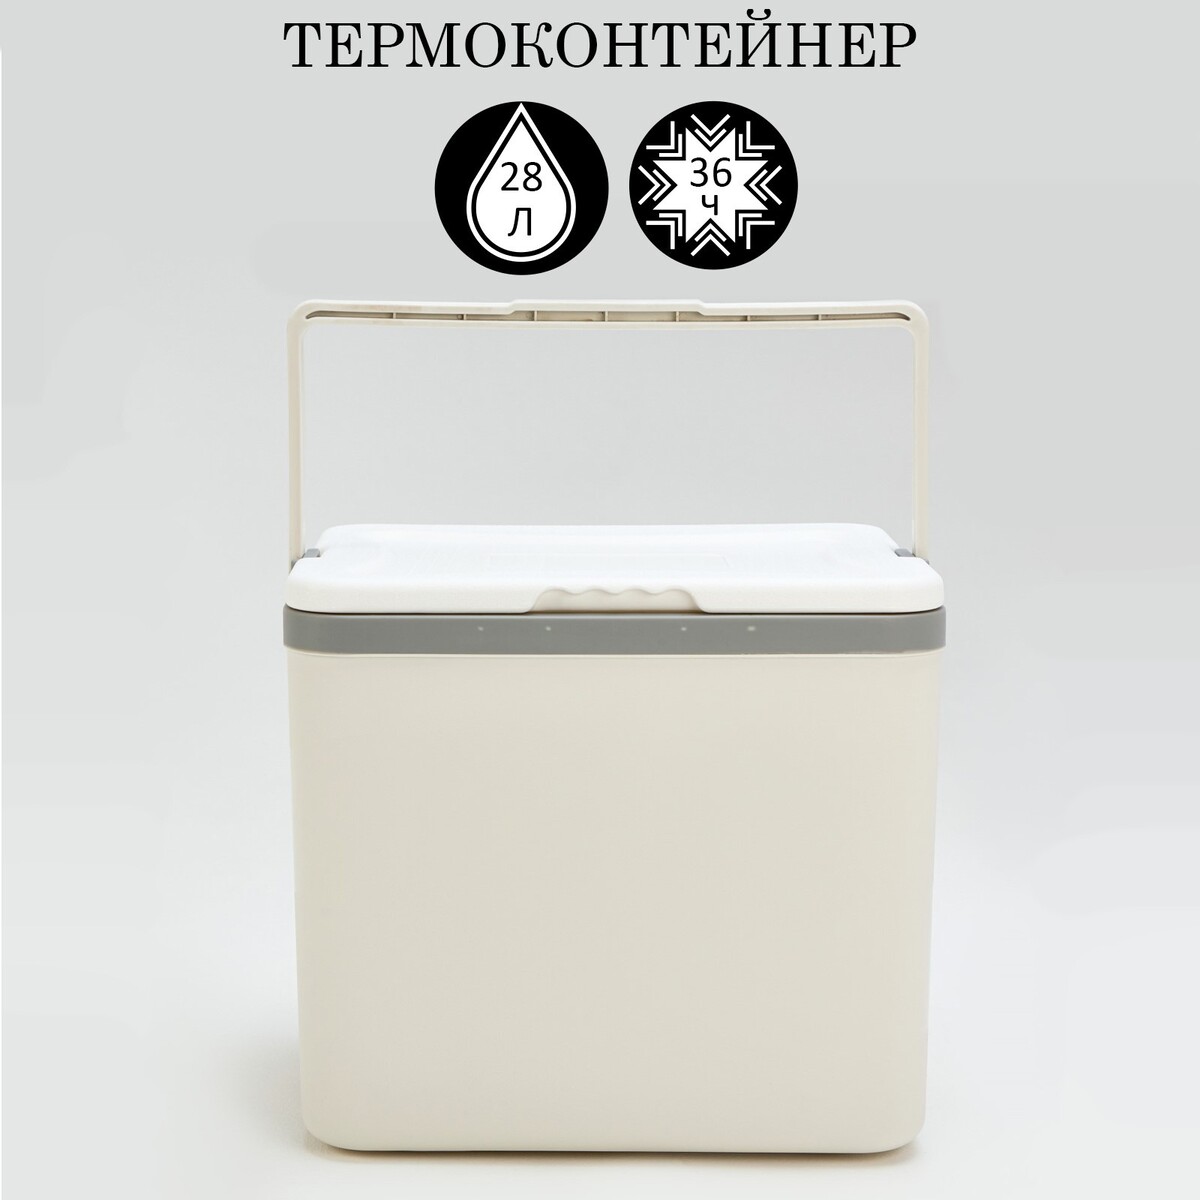 Термоконтейнер, 28 л, сохраняет холод до 36 ч, 40 х 30 х 35 см якутский холод популярная энциклопедия